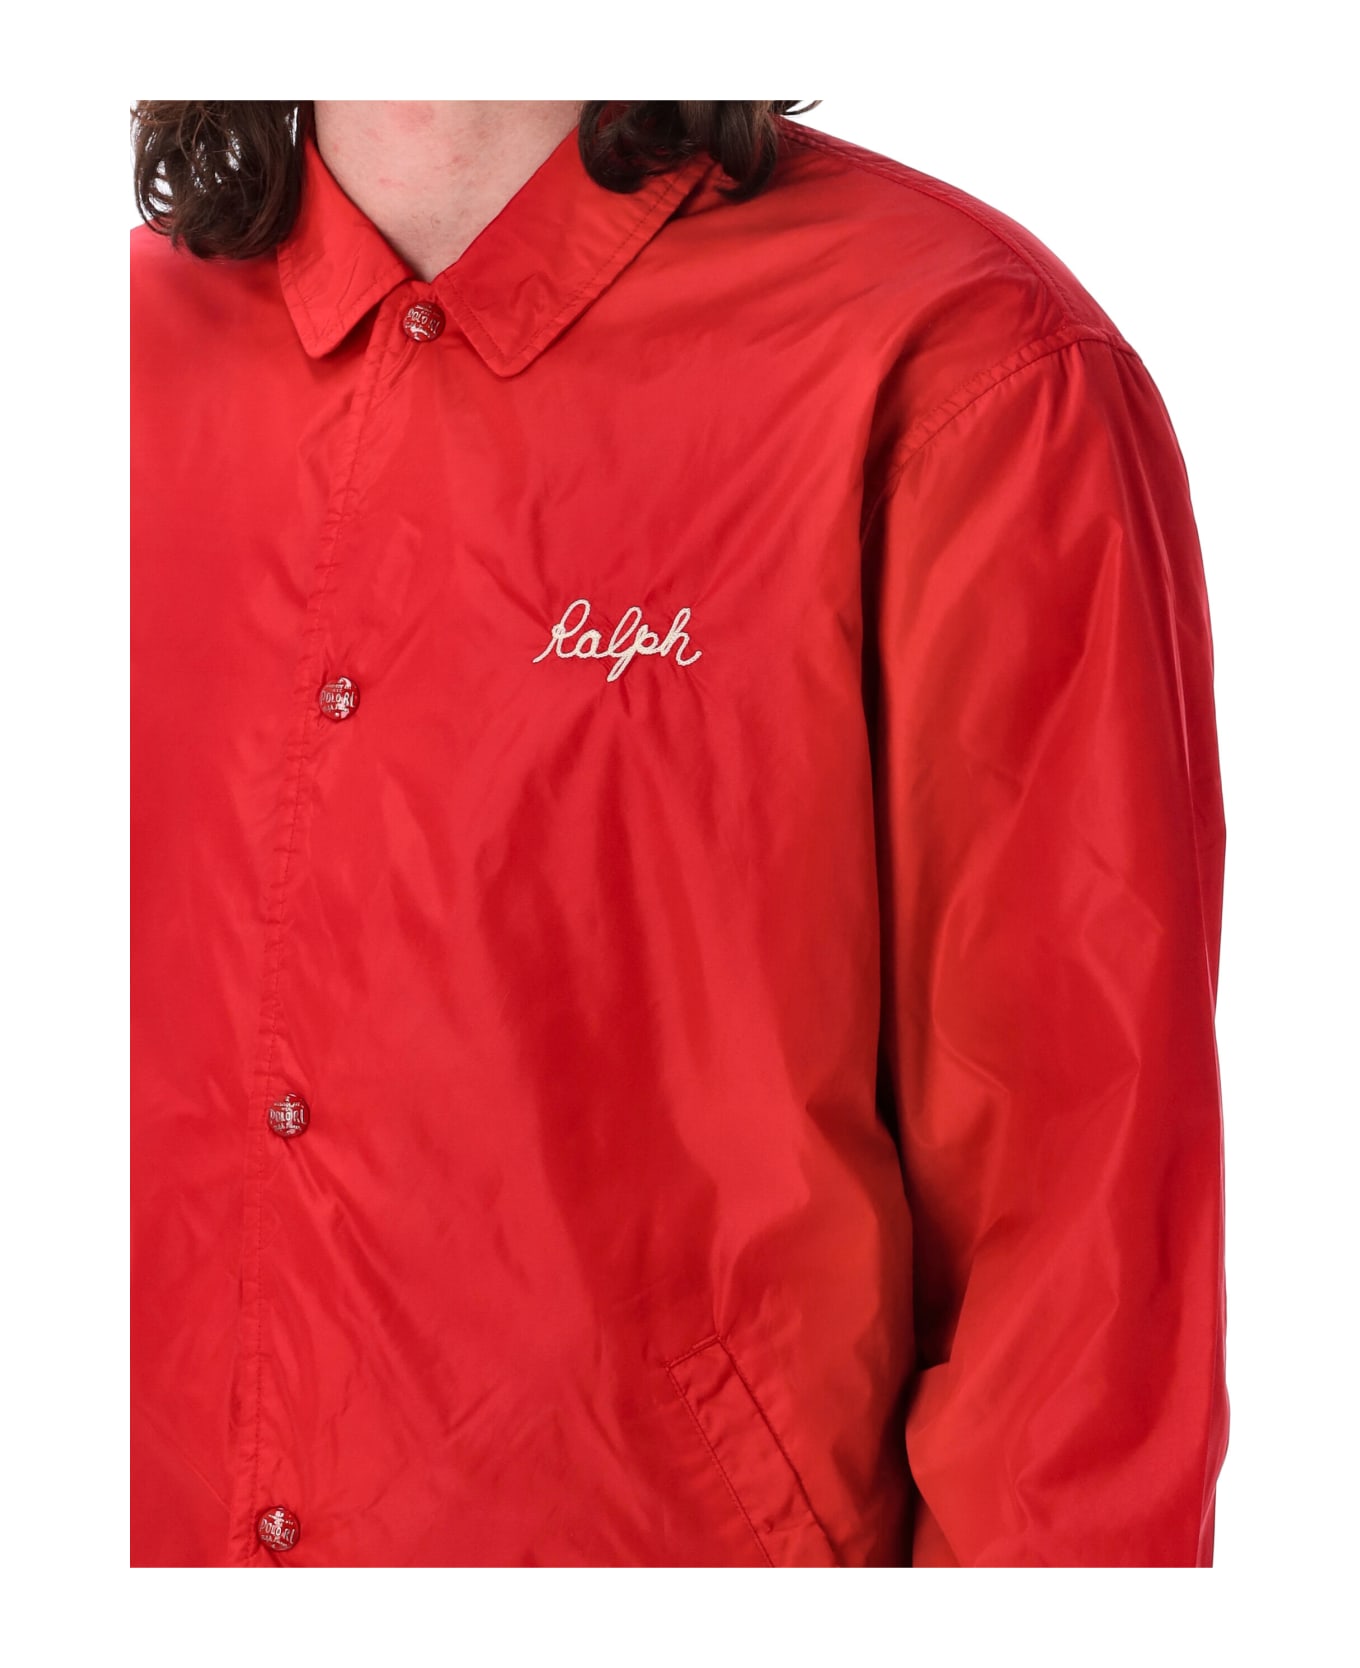 Polo Ralph Lauren Coach Jacket - RED